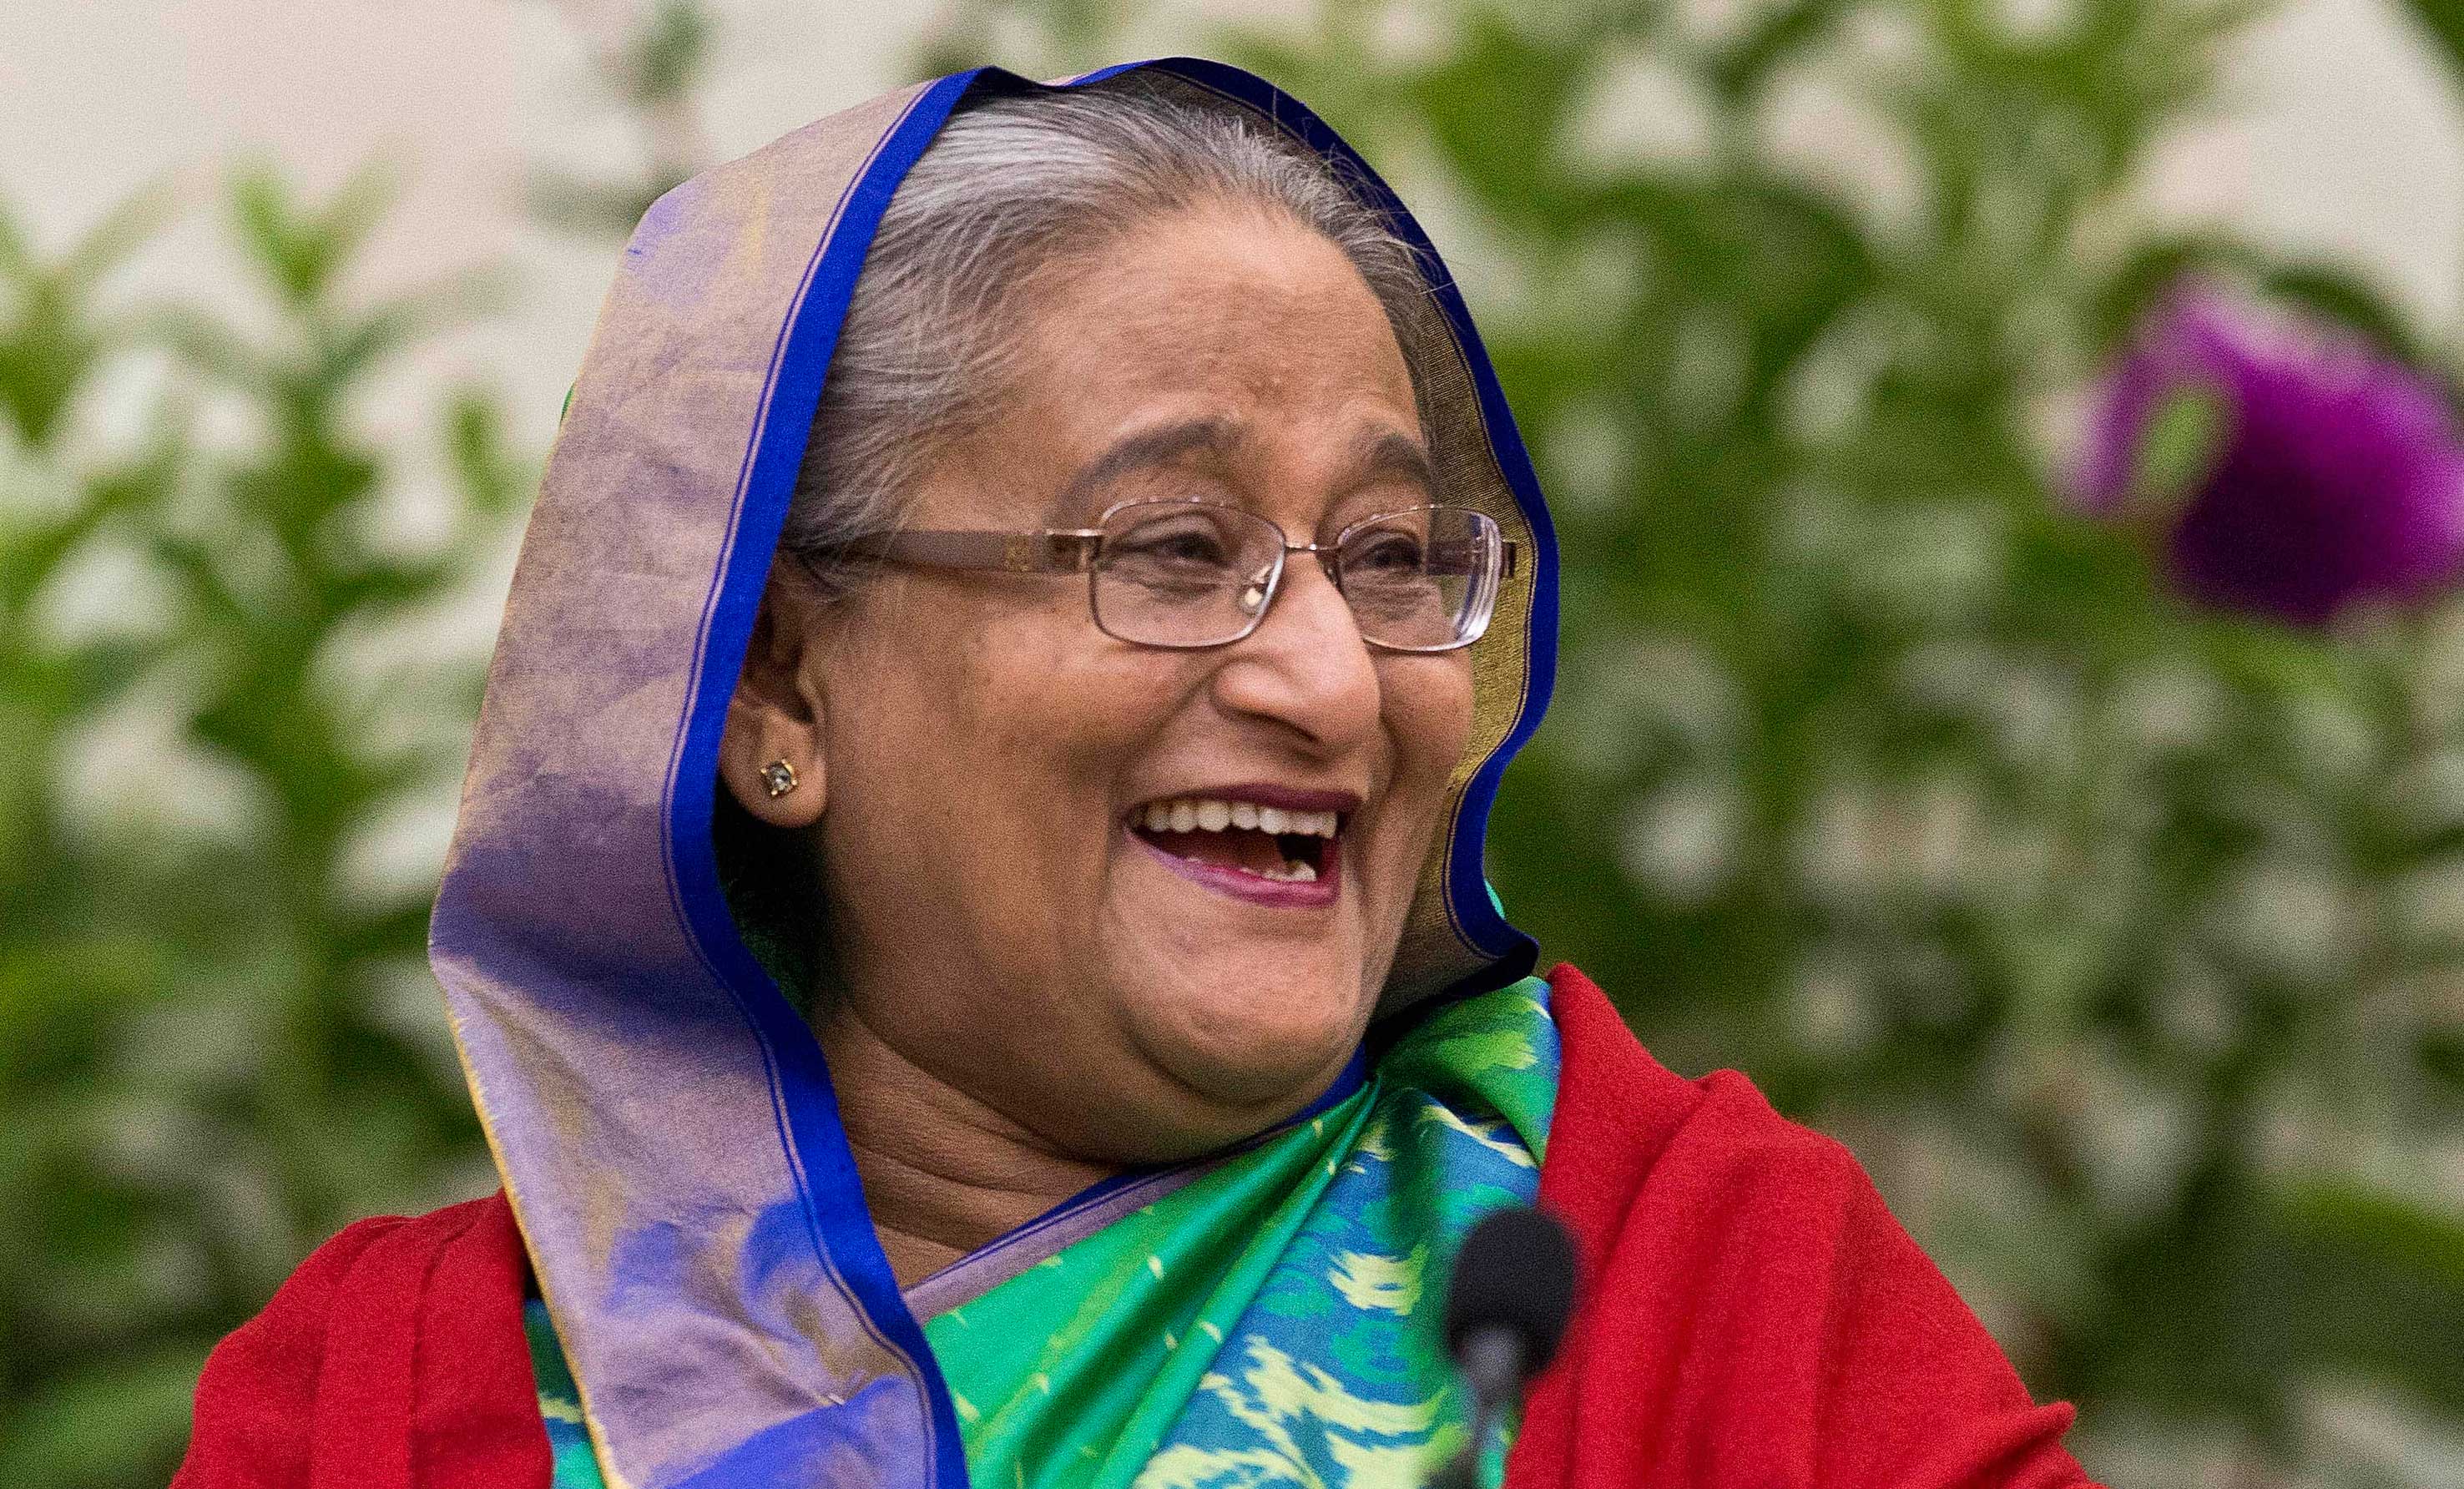 Sheikh Hasina Wajed-led Awami League swept the Bangladesh elections by winning 96% of the seats.